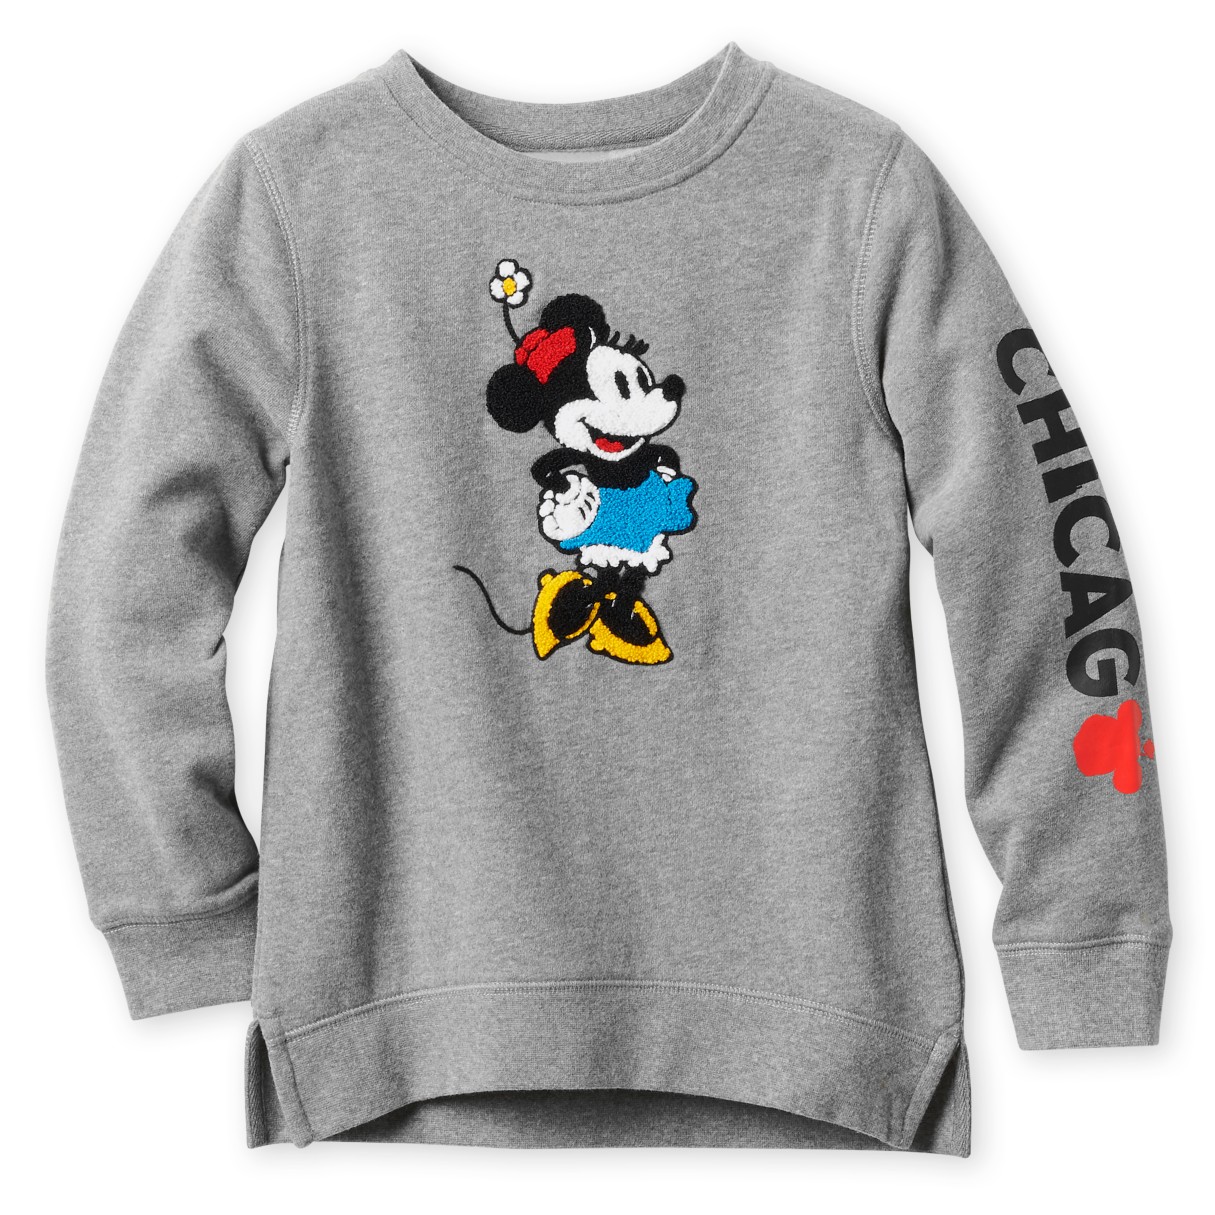 Minnie Mouse Sweatshirt for Girls - Chicago | shopDisney